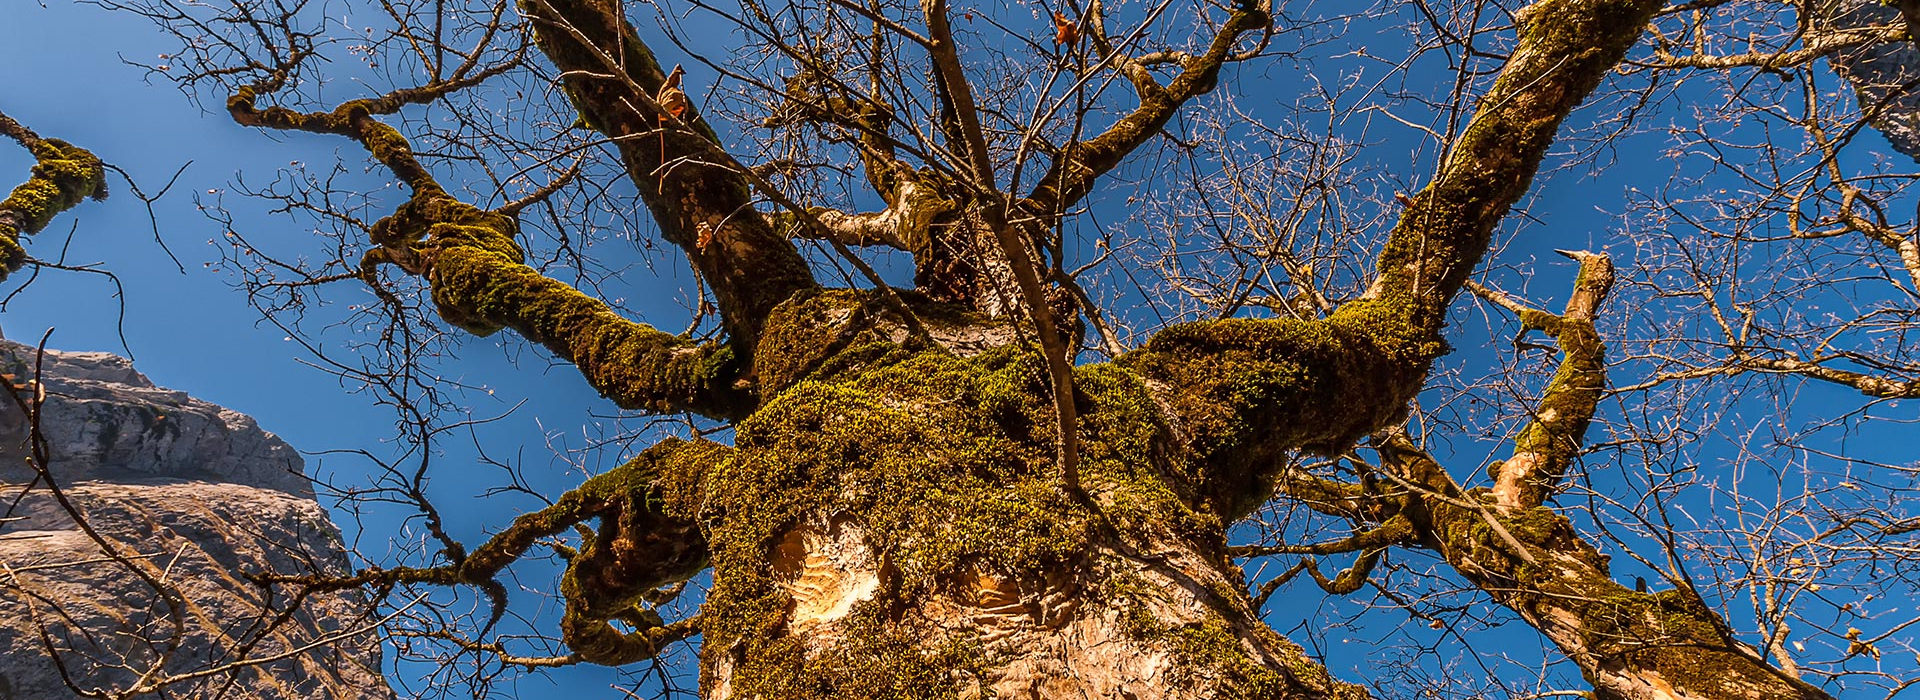 Knorriger Baum, Waldbaden